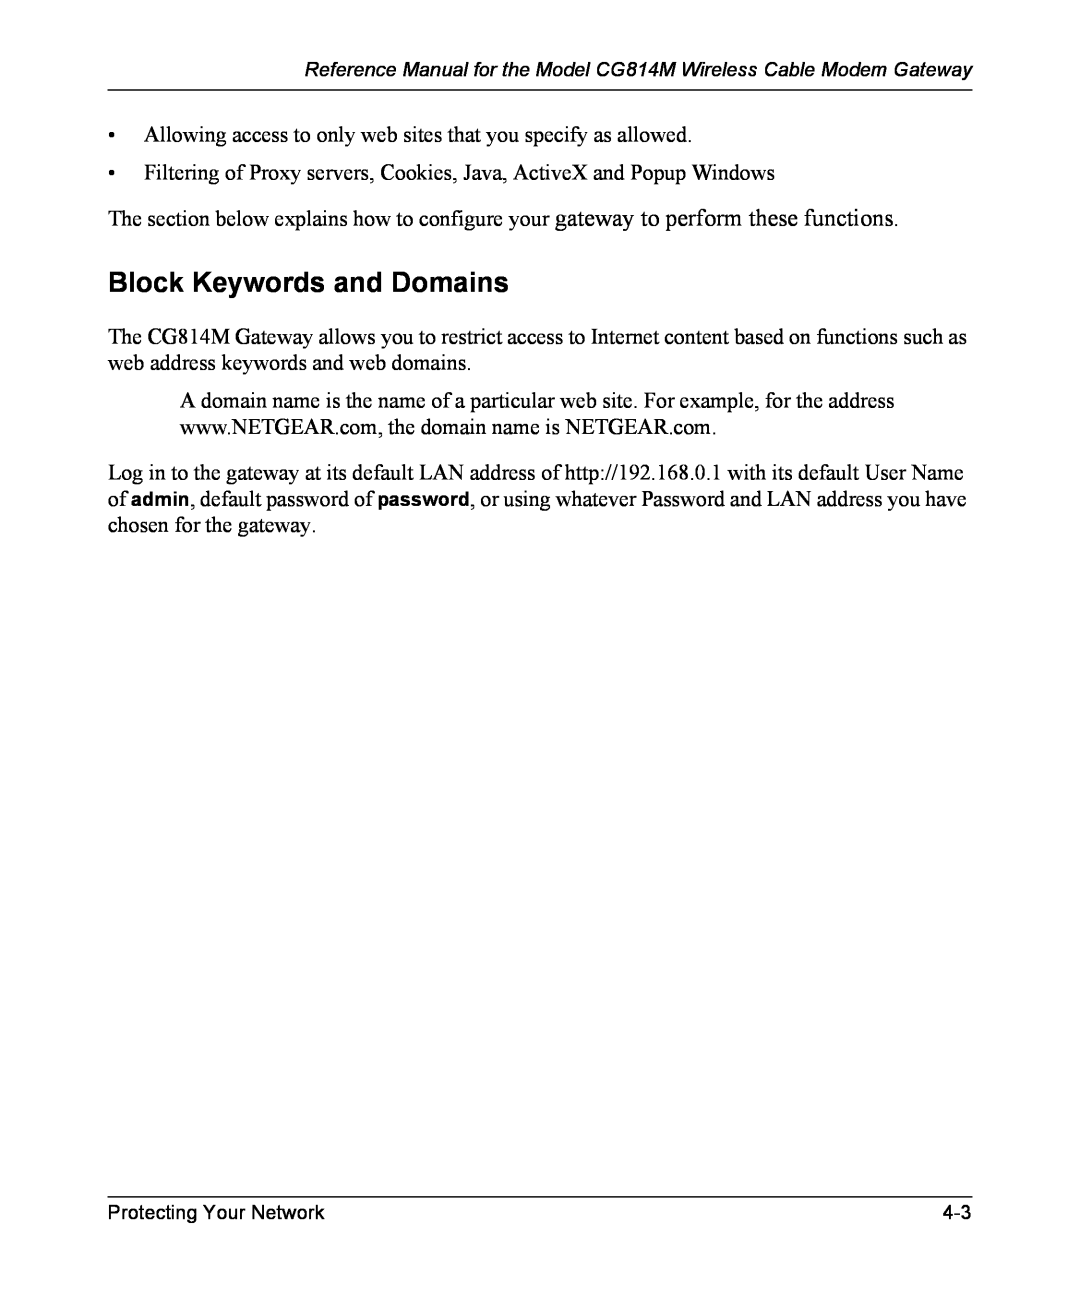 NETGEAR CG814M manual Block Keywords and Domains 